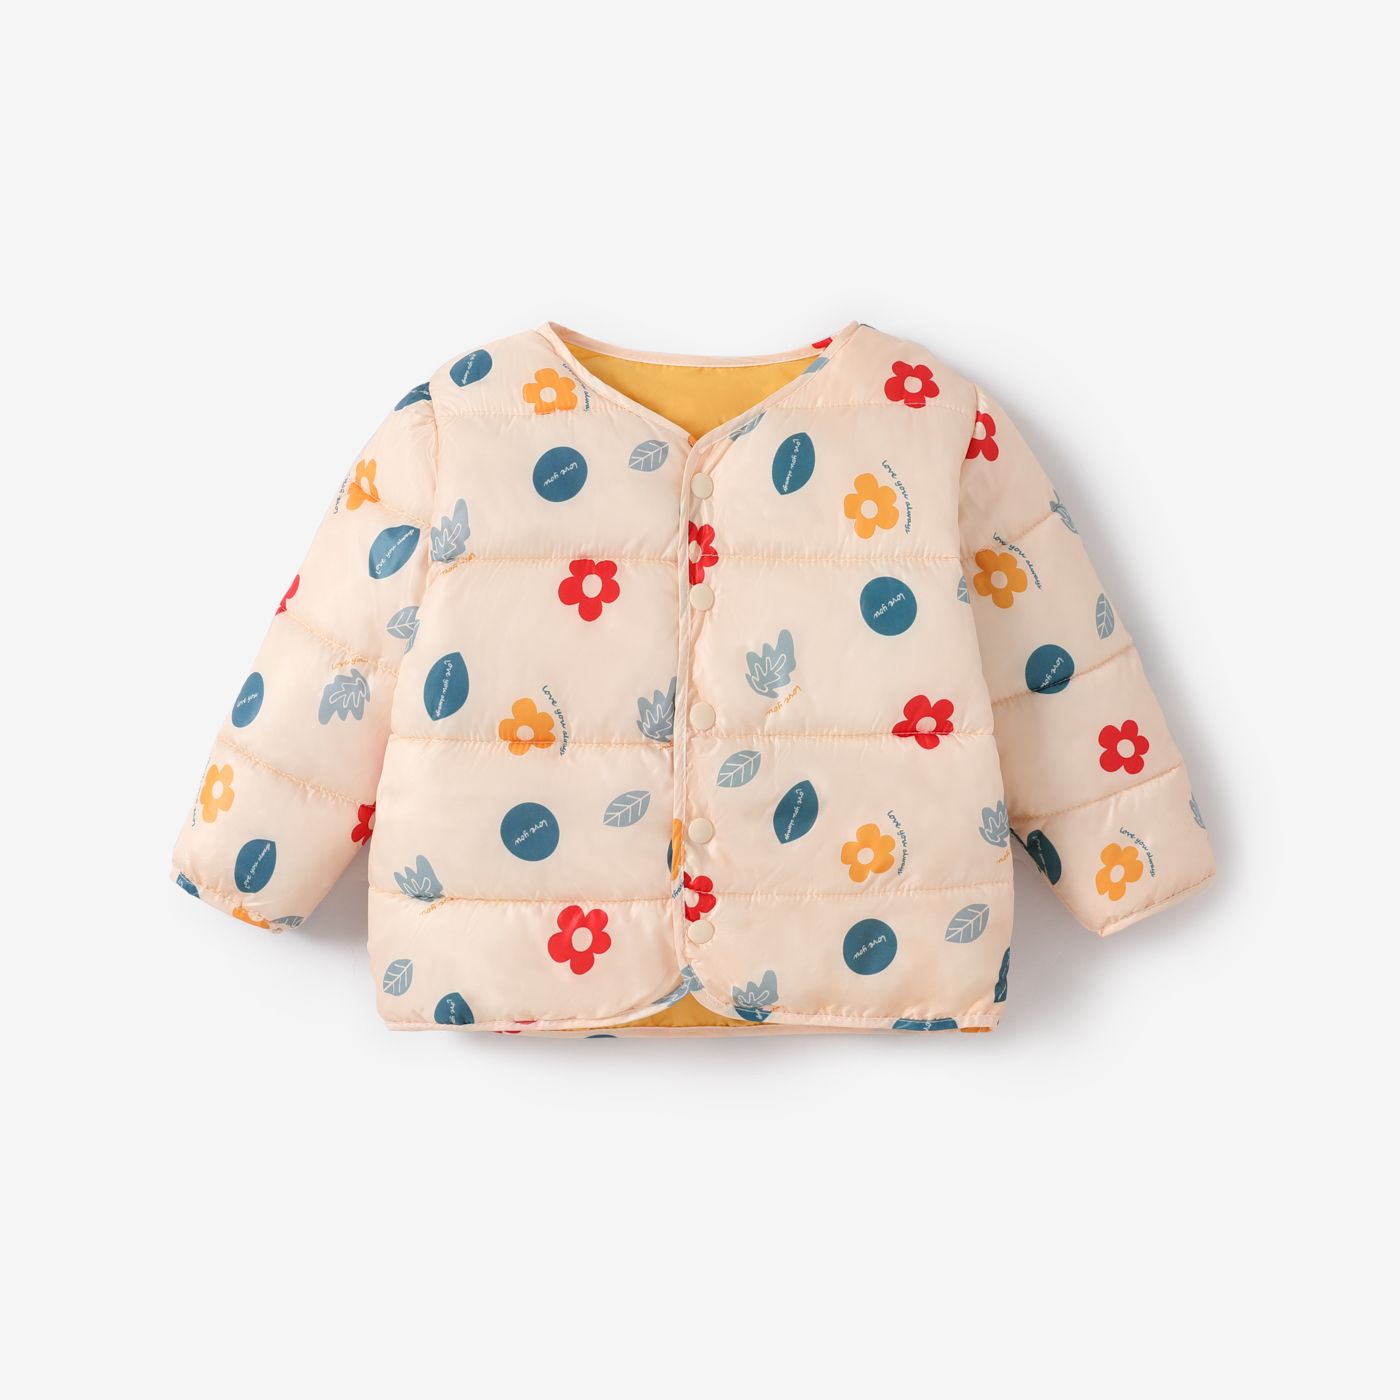 Toddler Boy/Girl Childlike Flower And Elephant Print Winter Coat